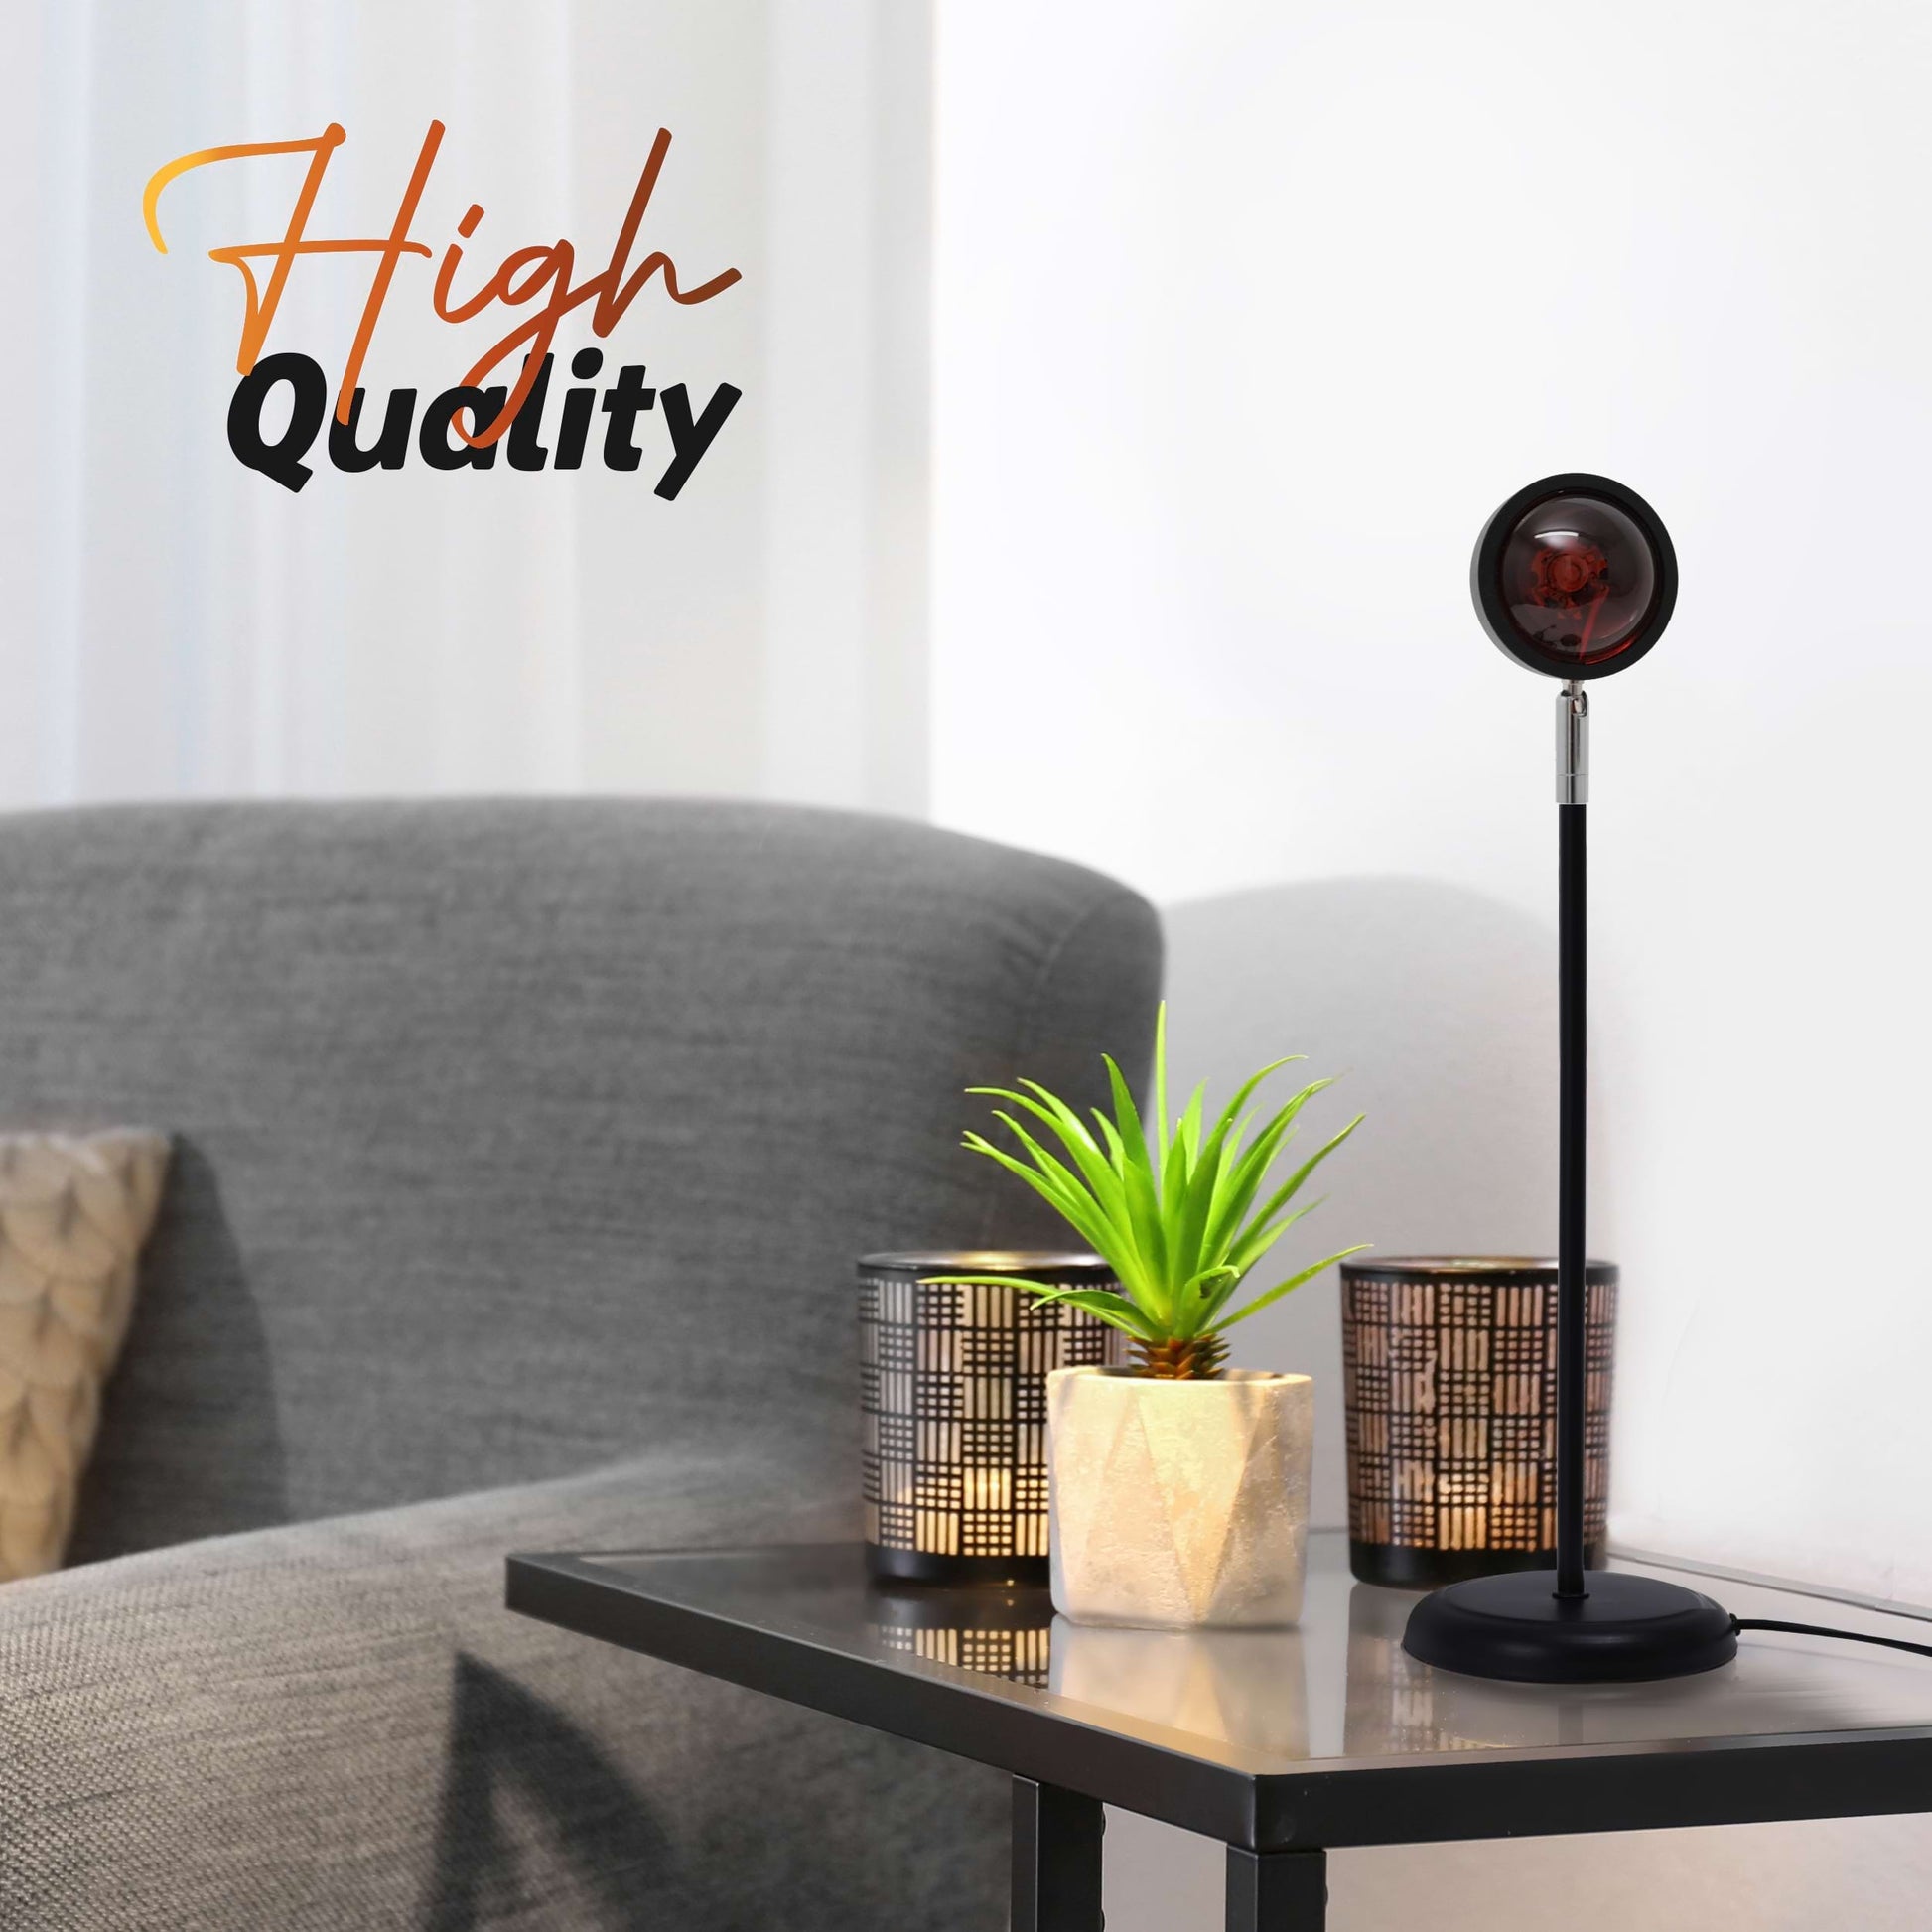 High quality lamp